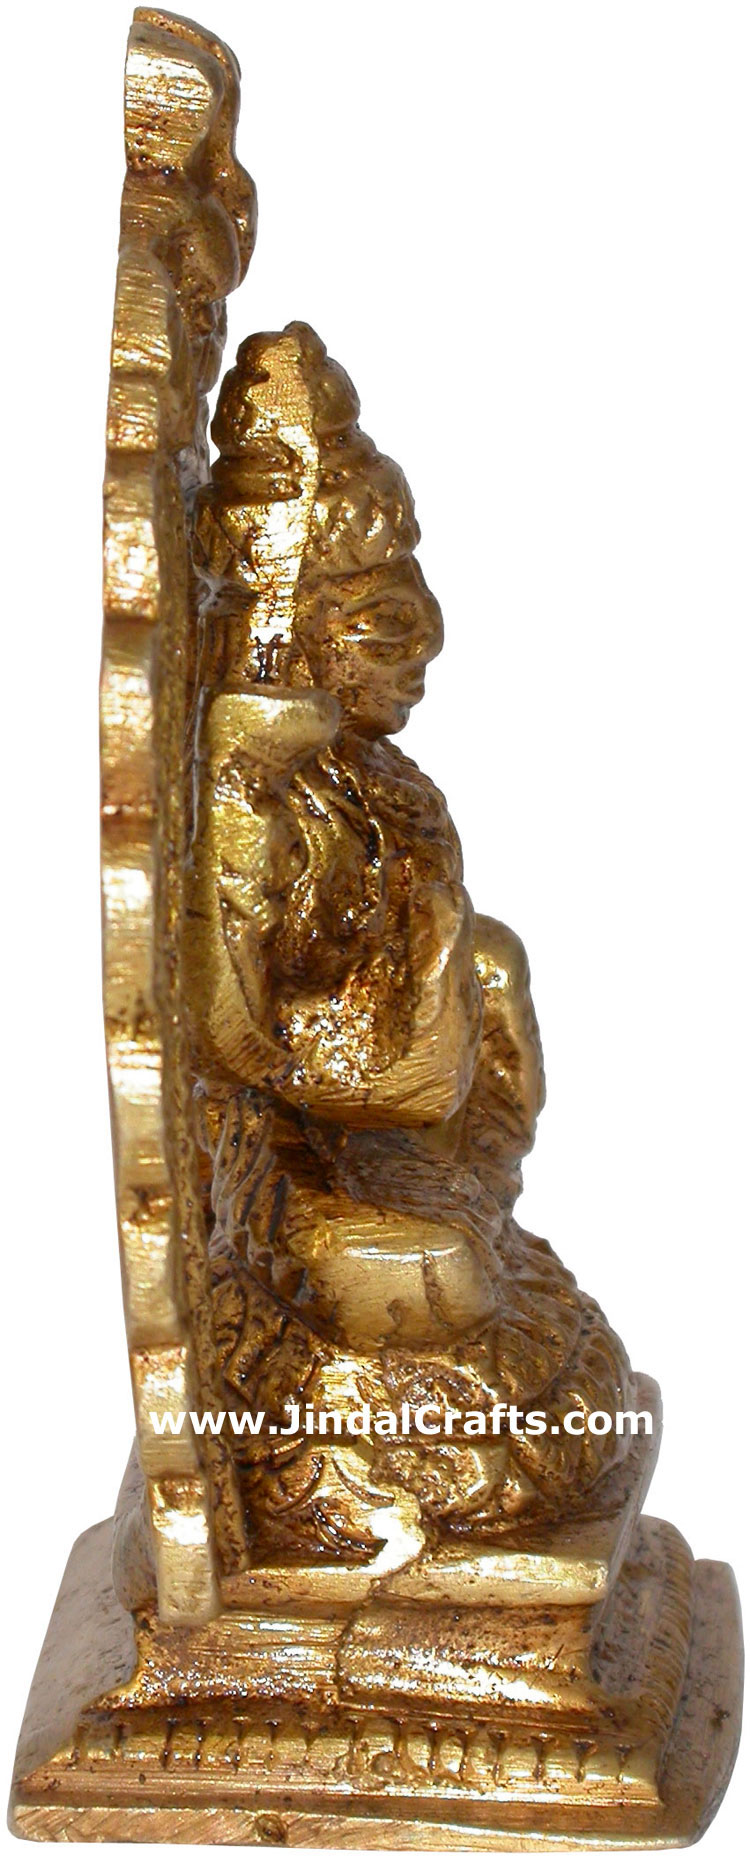 Hindu Deities Goddess Luxmi India Brass Carving Arts